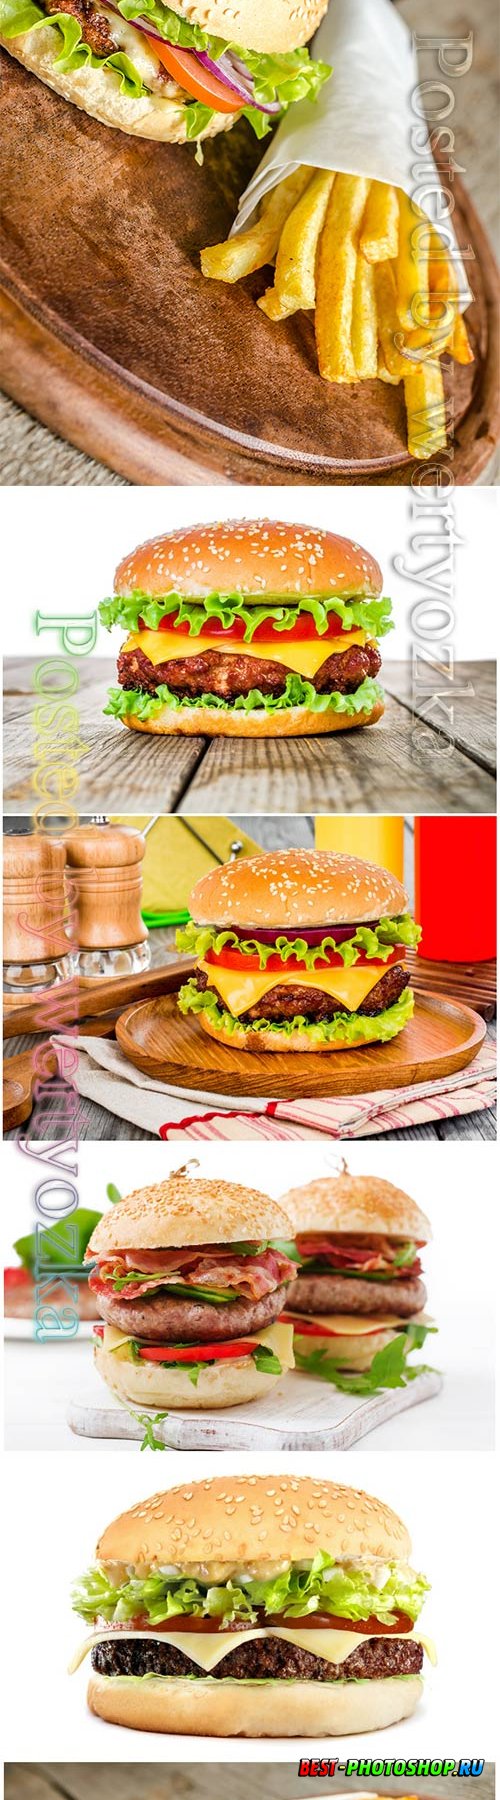 Cheeseburger, hamburger beautiful stock photo